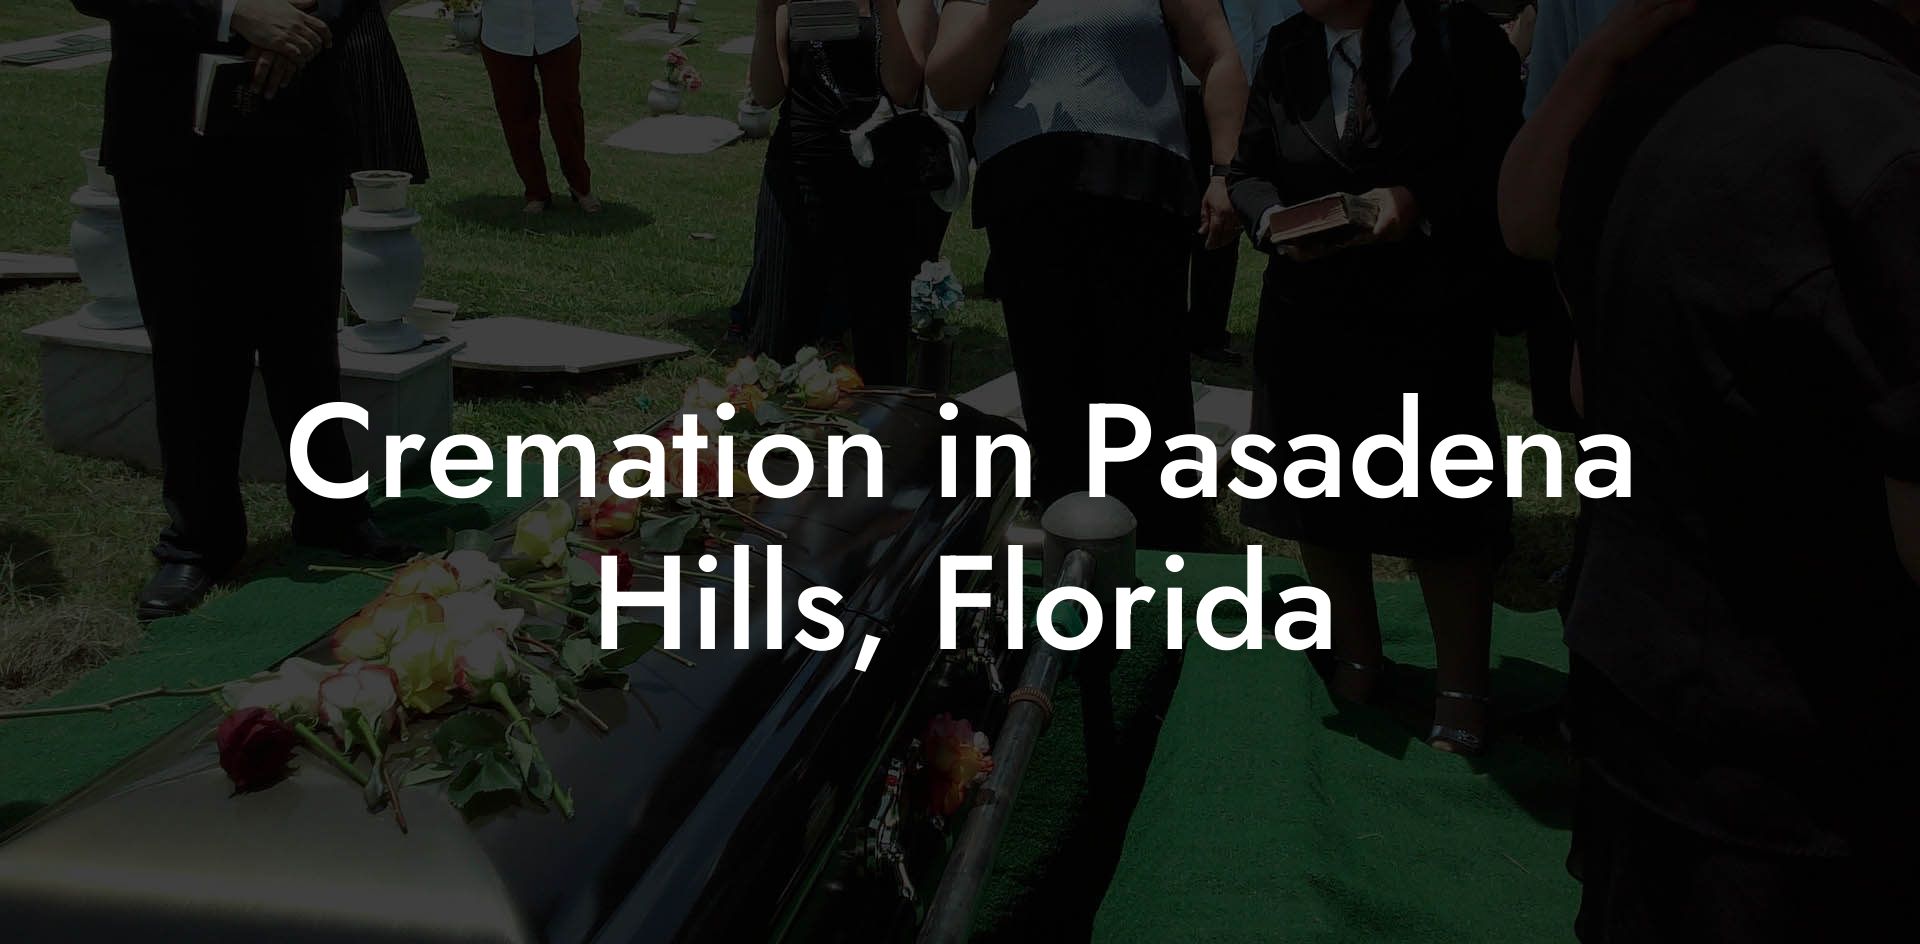 Cremation in Pasadena Hills, Florida